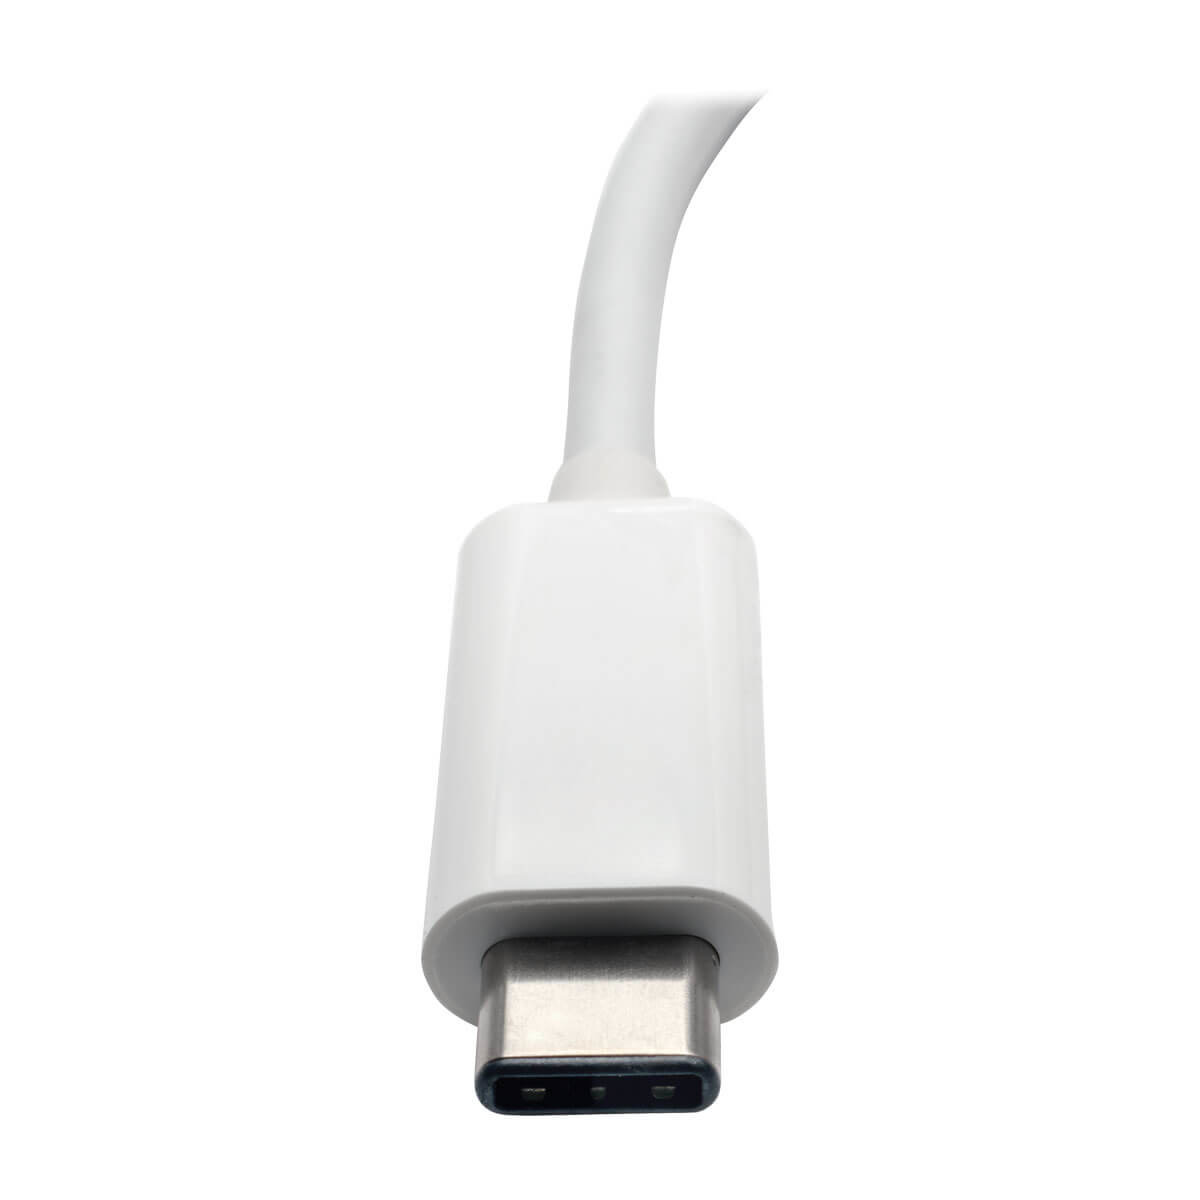 USB-C TO VGA Adapter HUB Charging GBE